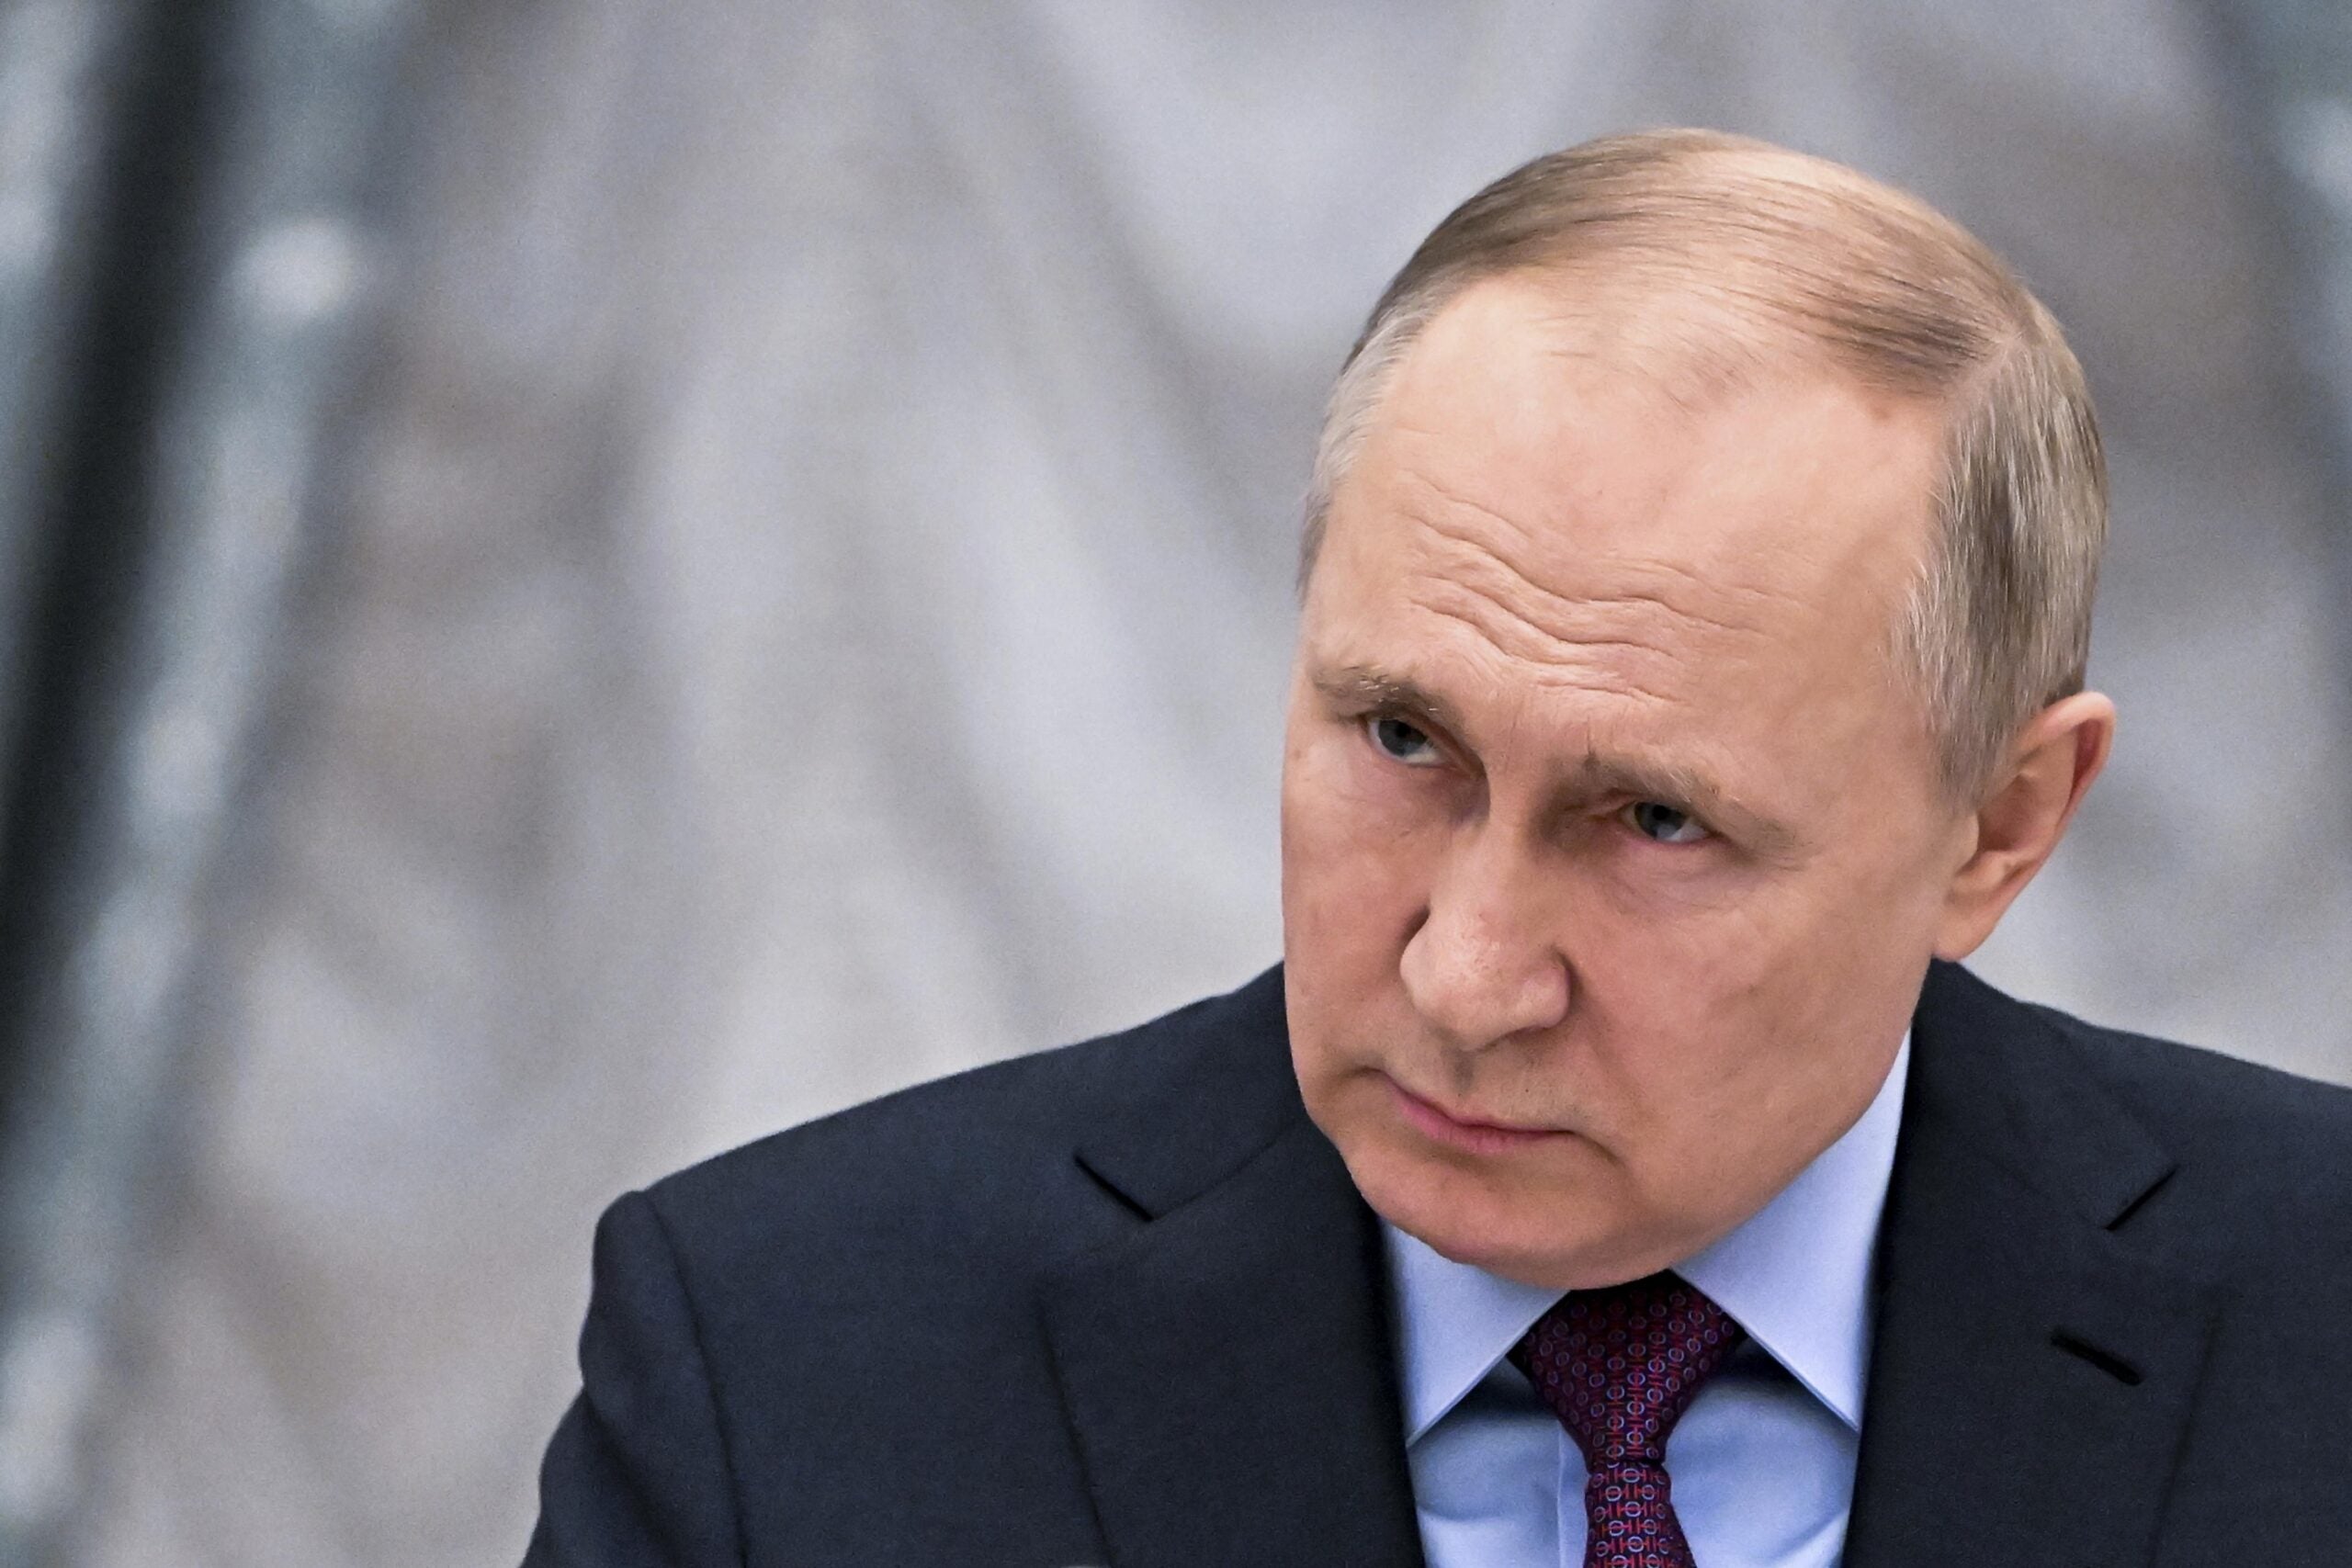 Putin unhappy with Ukraine grain shipment deal